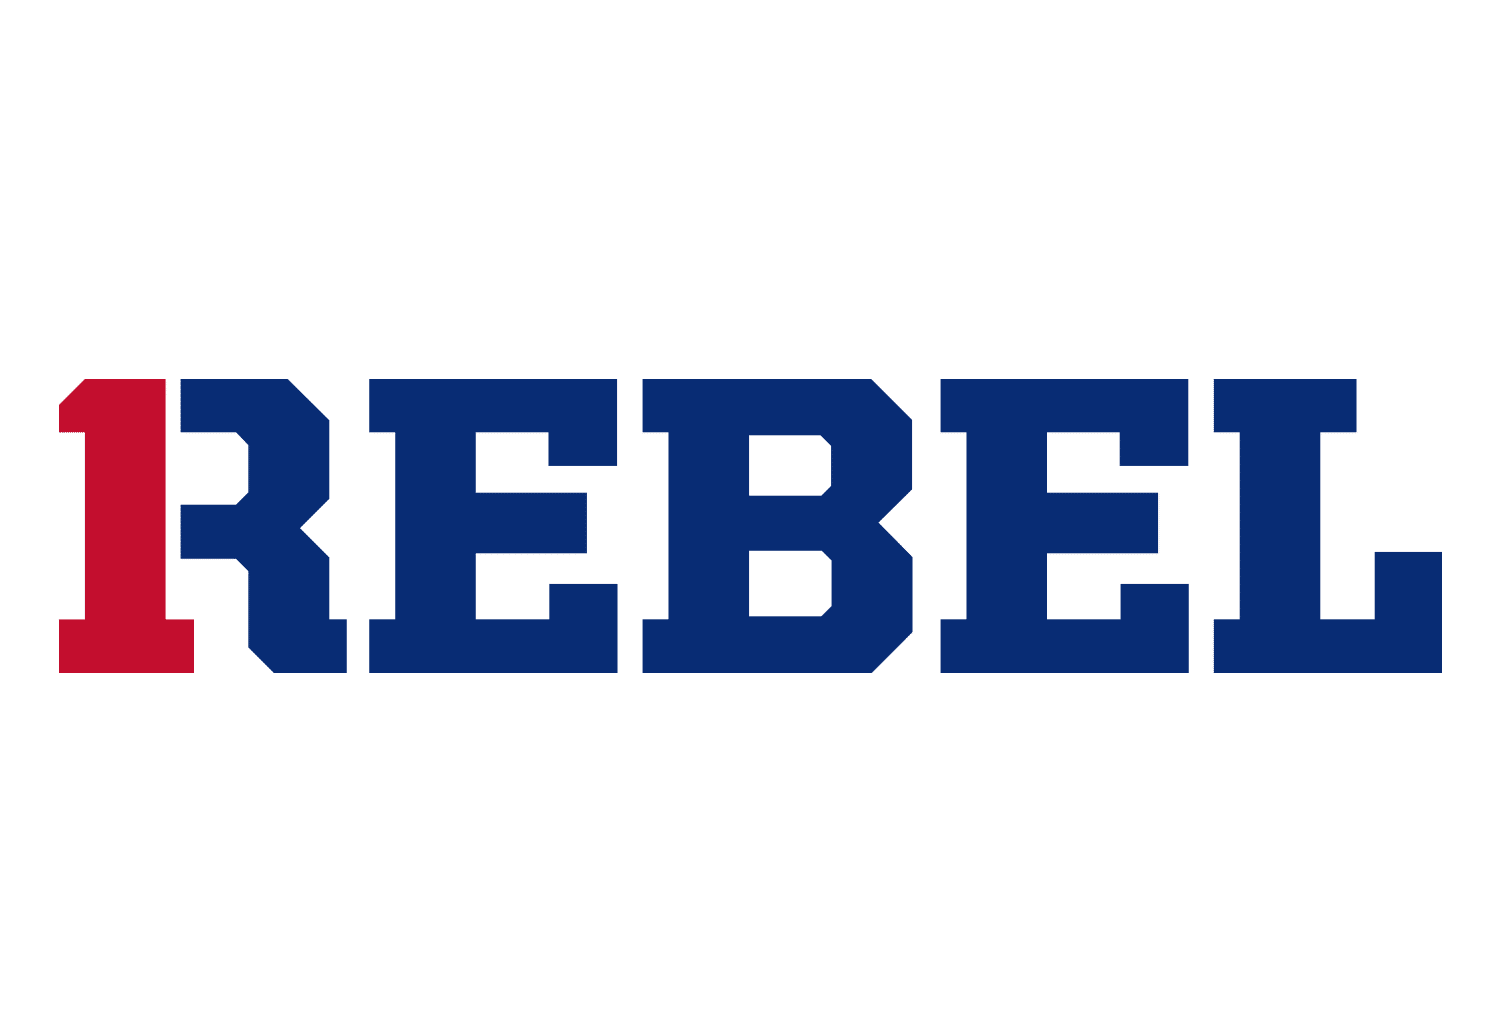 Rebels Logo - New Rebel Logo Part of Vestavia Rebranding | WBHM 90.3